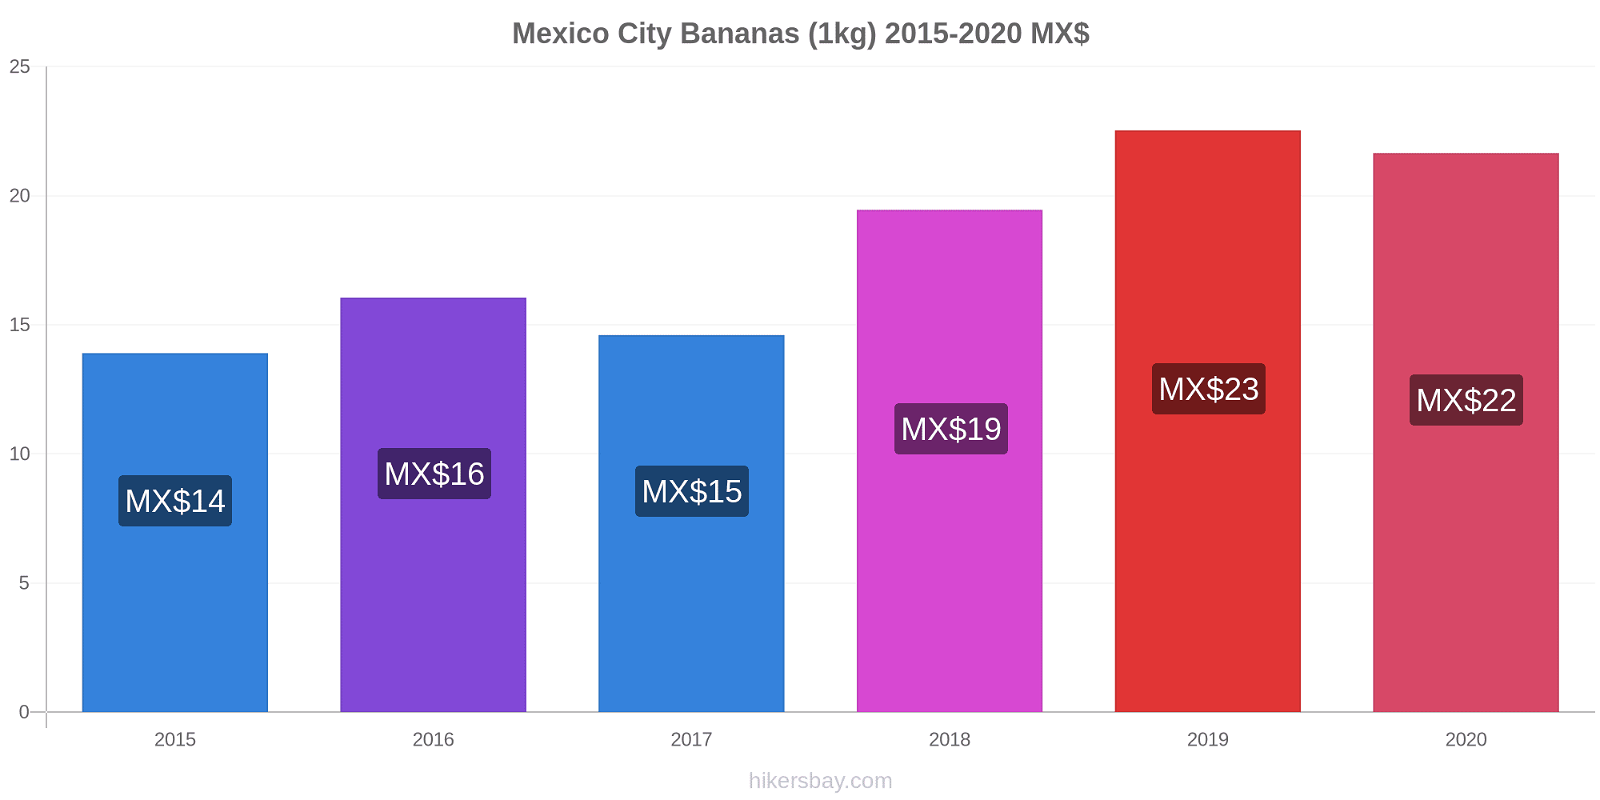 Mexico City price changes Bananas (1kg) hikersbay.com